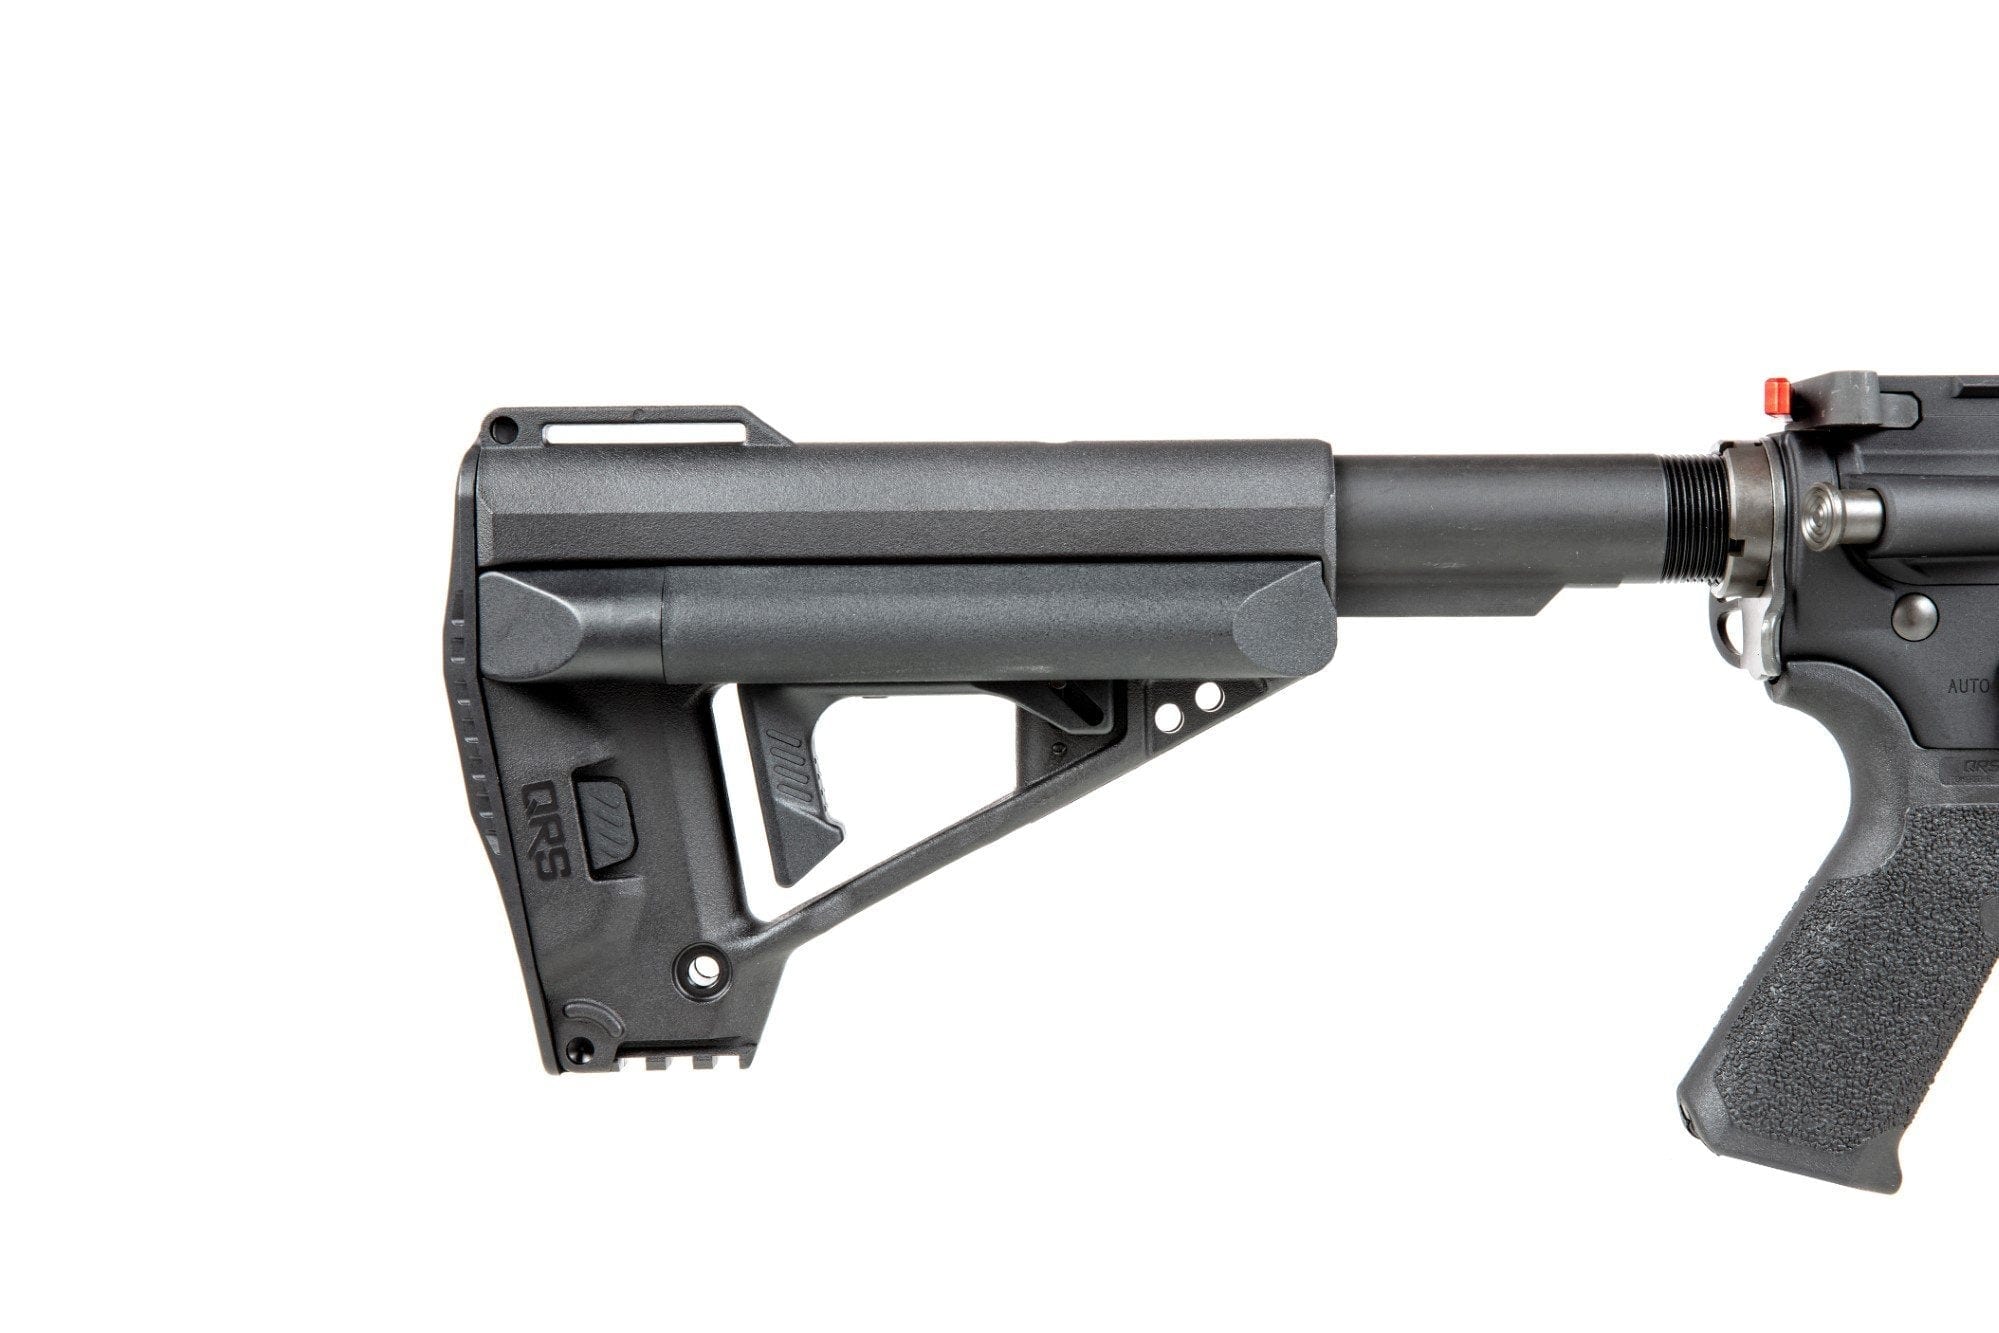 Avalon Leopard Carbine Replica - Schwarz/Rot